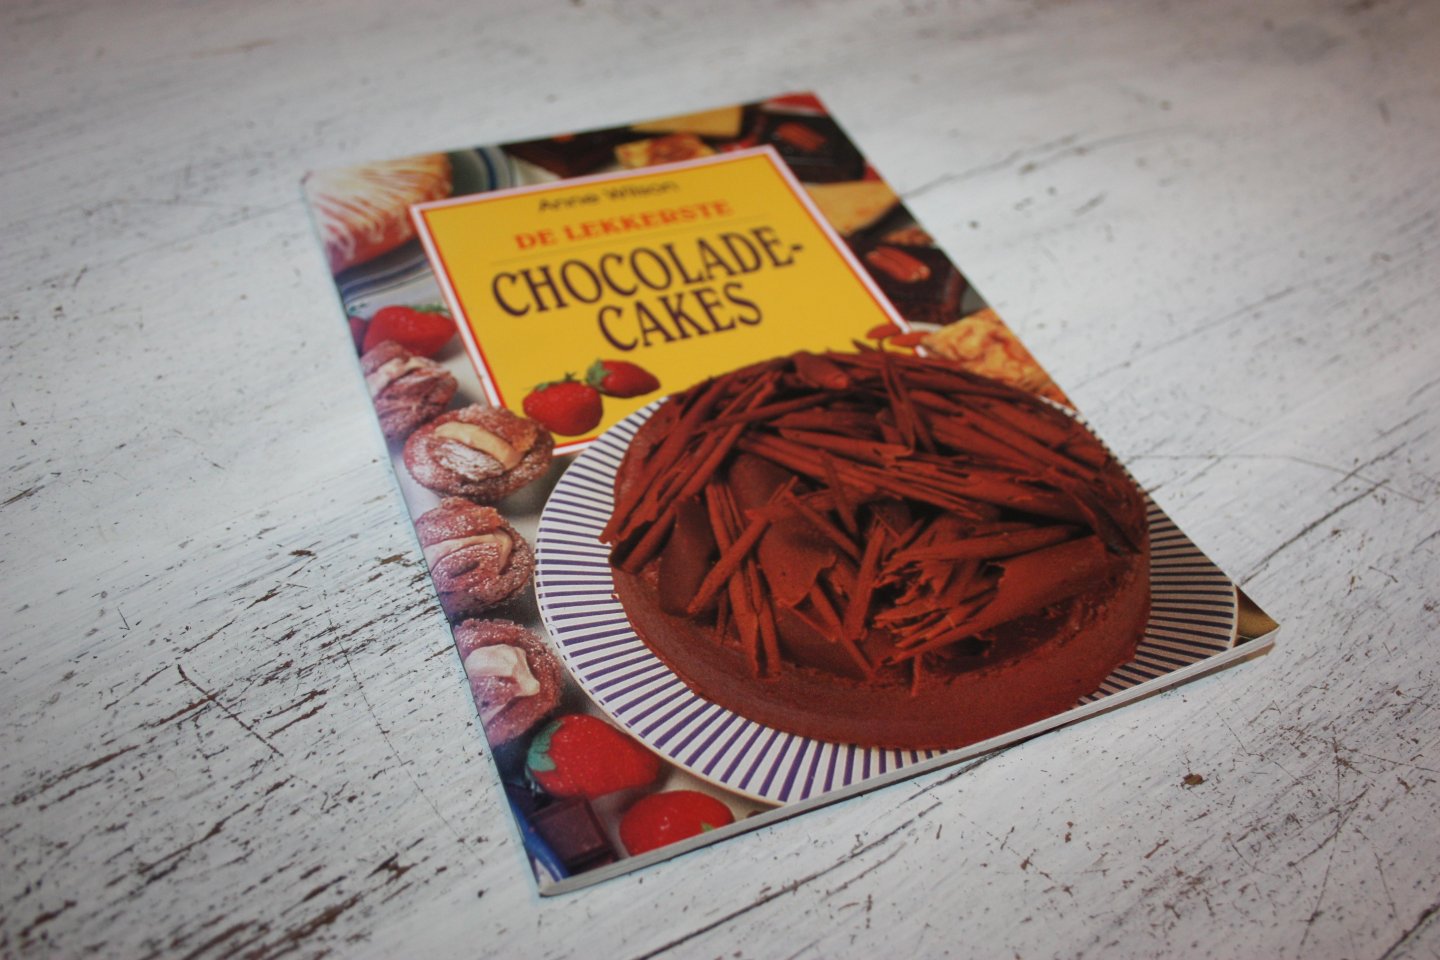 Wilson, Anne - DE LEKKERSTE CHOCOLADE-CAKES